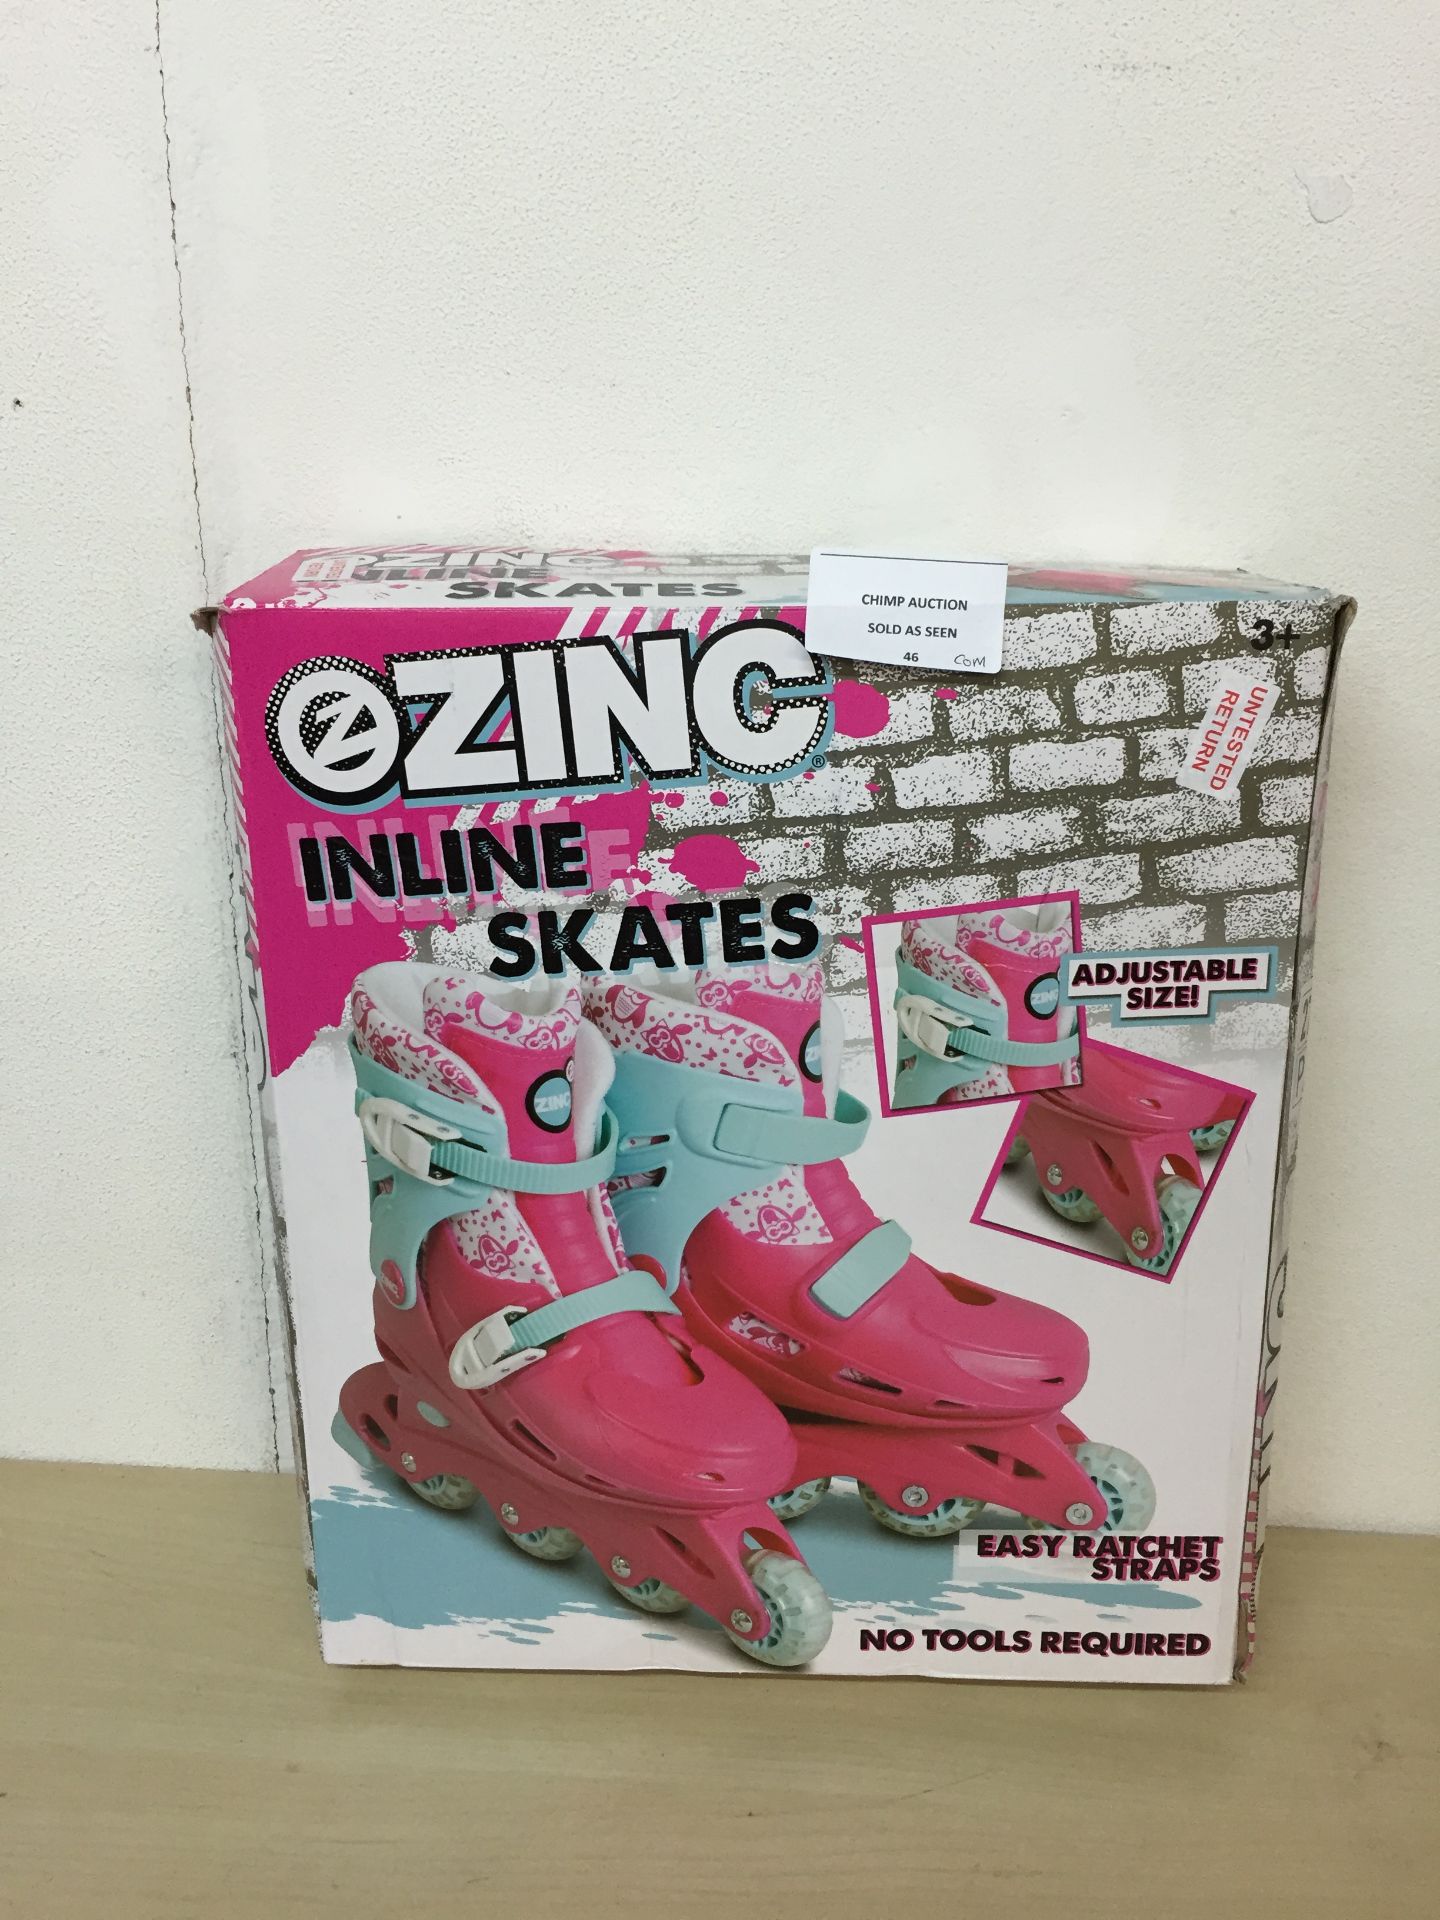 BOXED ZINC INLINE SKATES RRP £29.99 CHANGE OF MIND RETURN